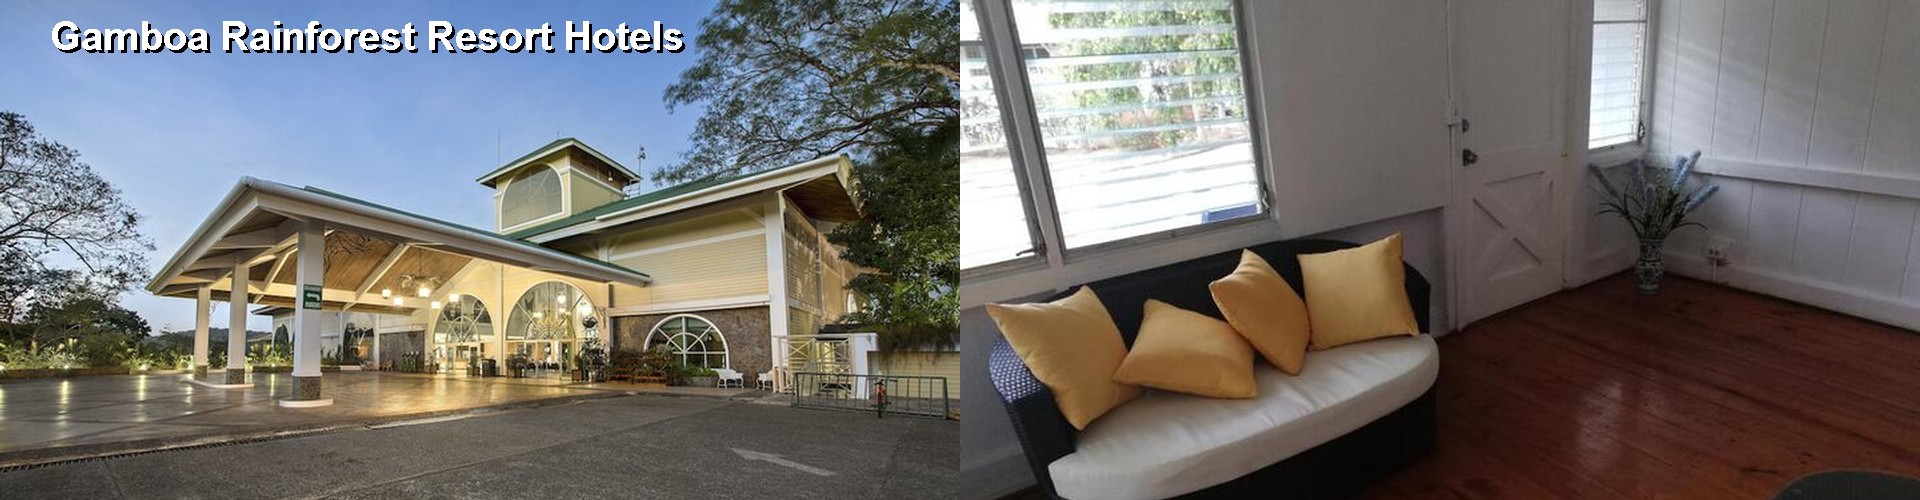 5 Best Hotels near Gamboa Rainforest Resort